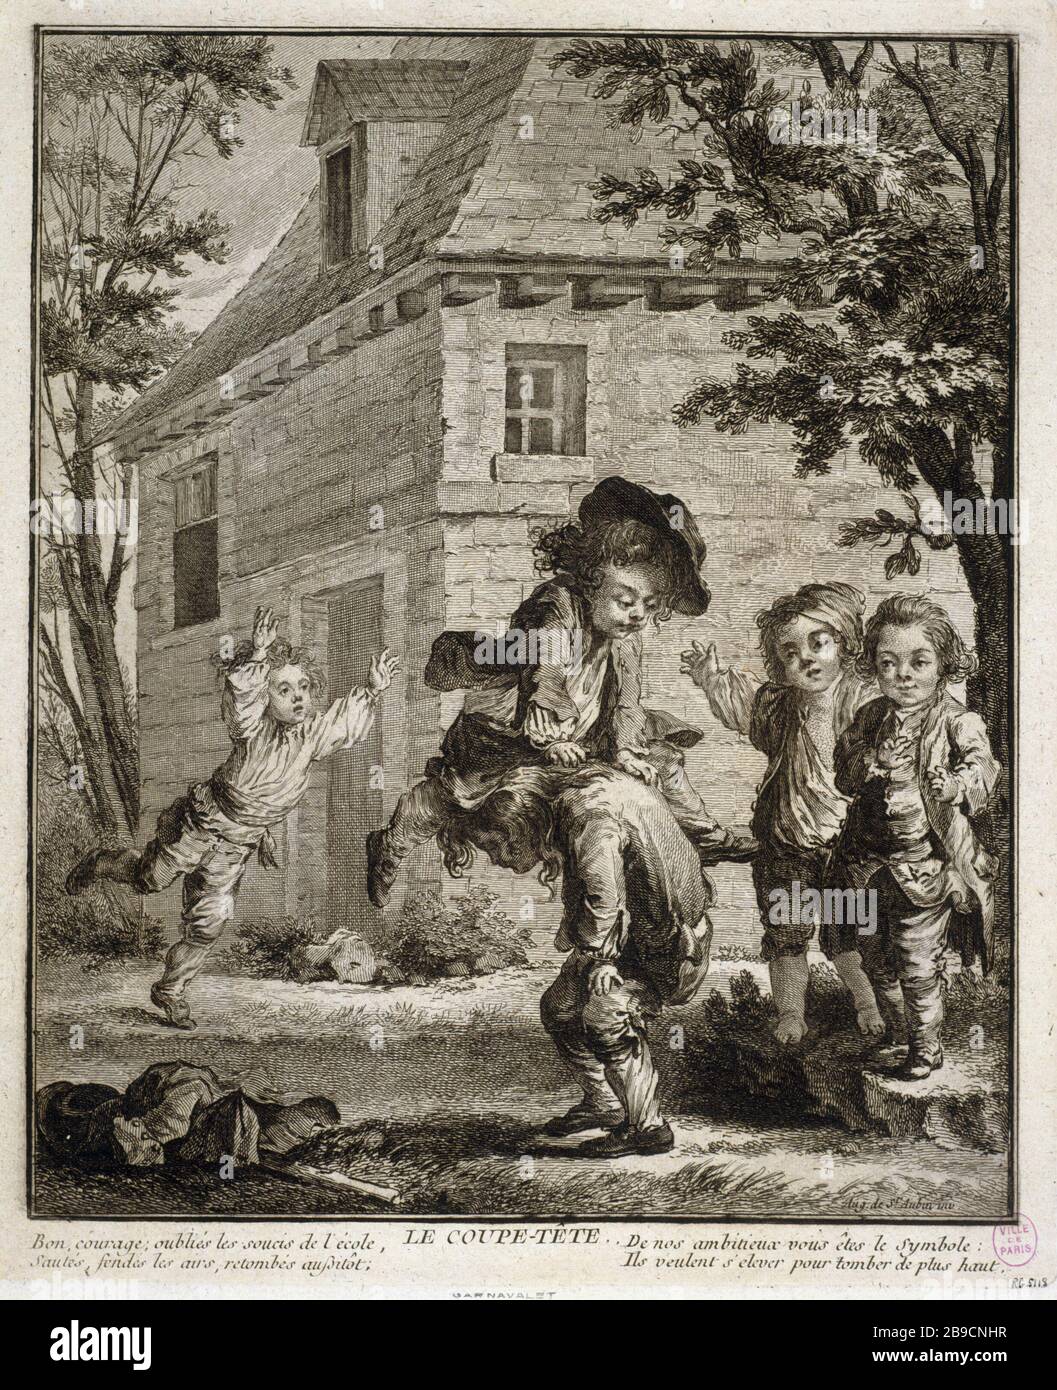 DEN KOPF SCHNEIDEN ODER SPRINGENDES SCHAF Augustin de Saint-Aubin (1736-1807). "Le coupé-tête ou sot de mouton". Tiefdruck. Paris, musée Carnavalet. Stockfoto